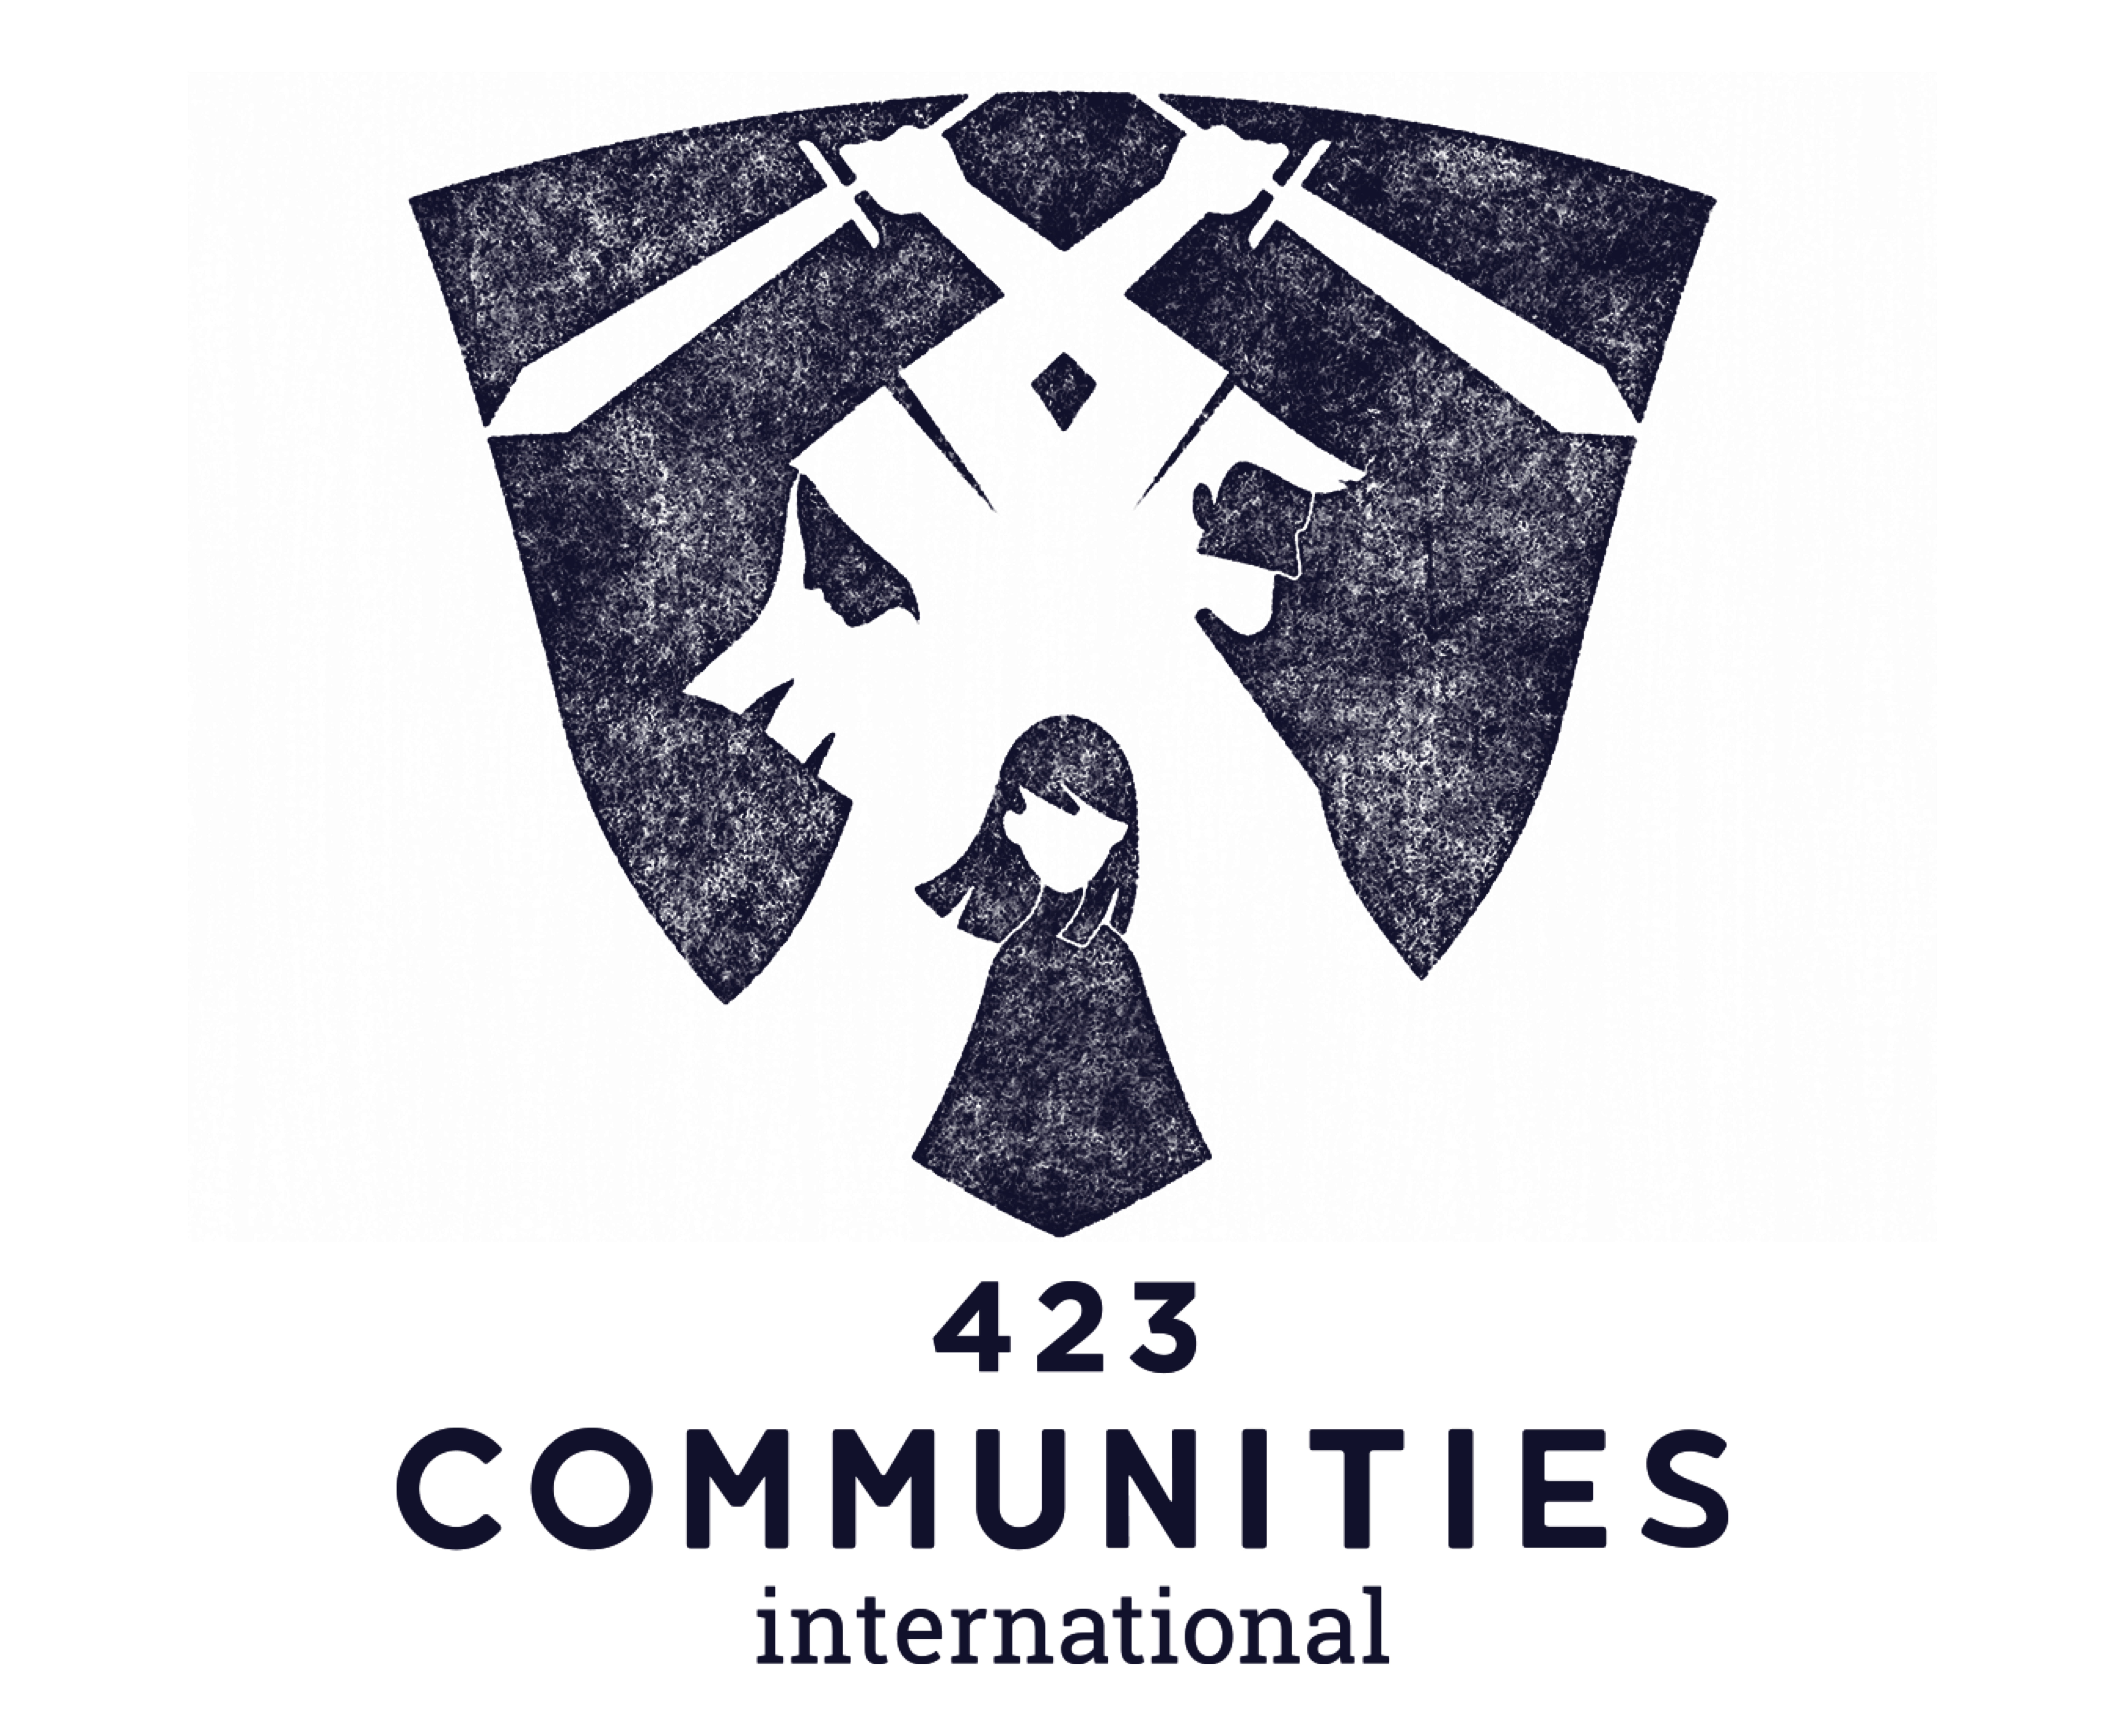 423 Communities International